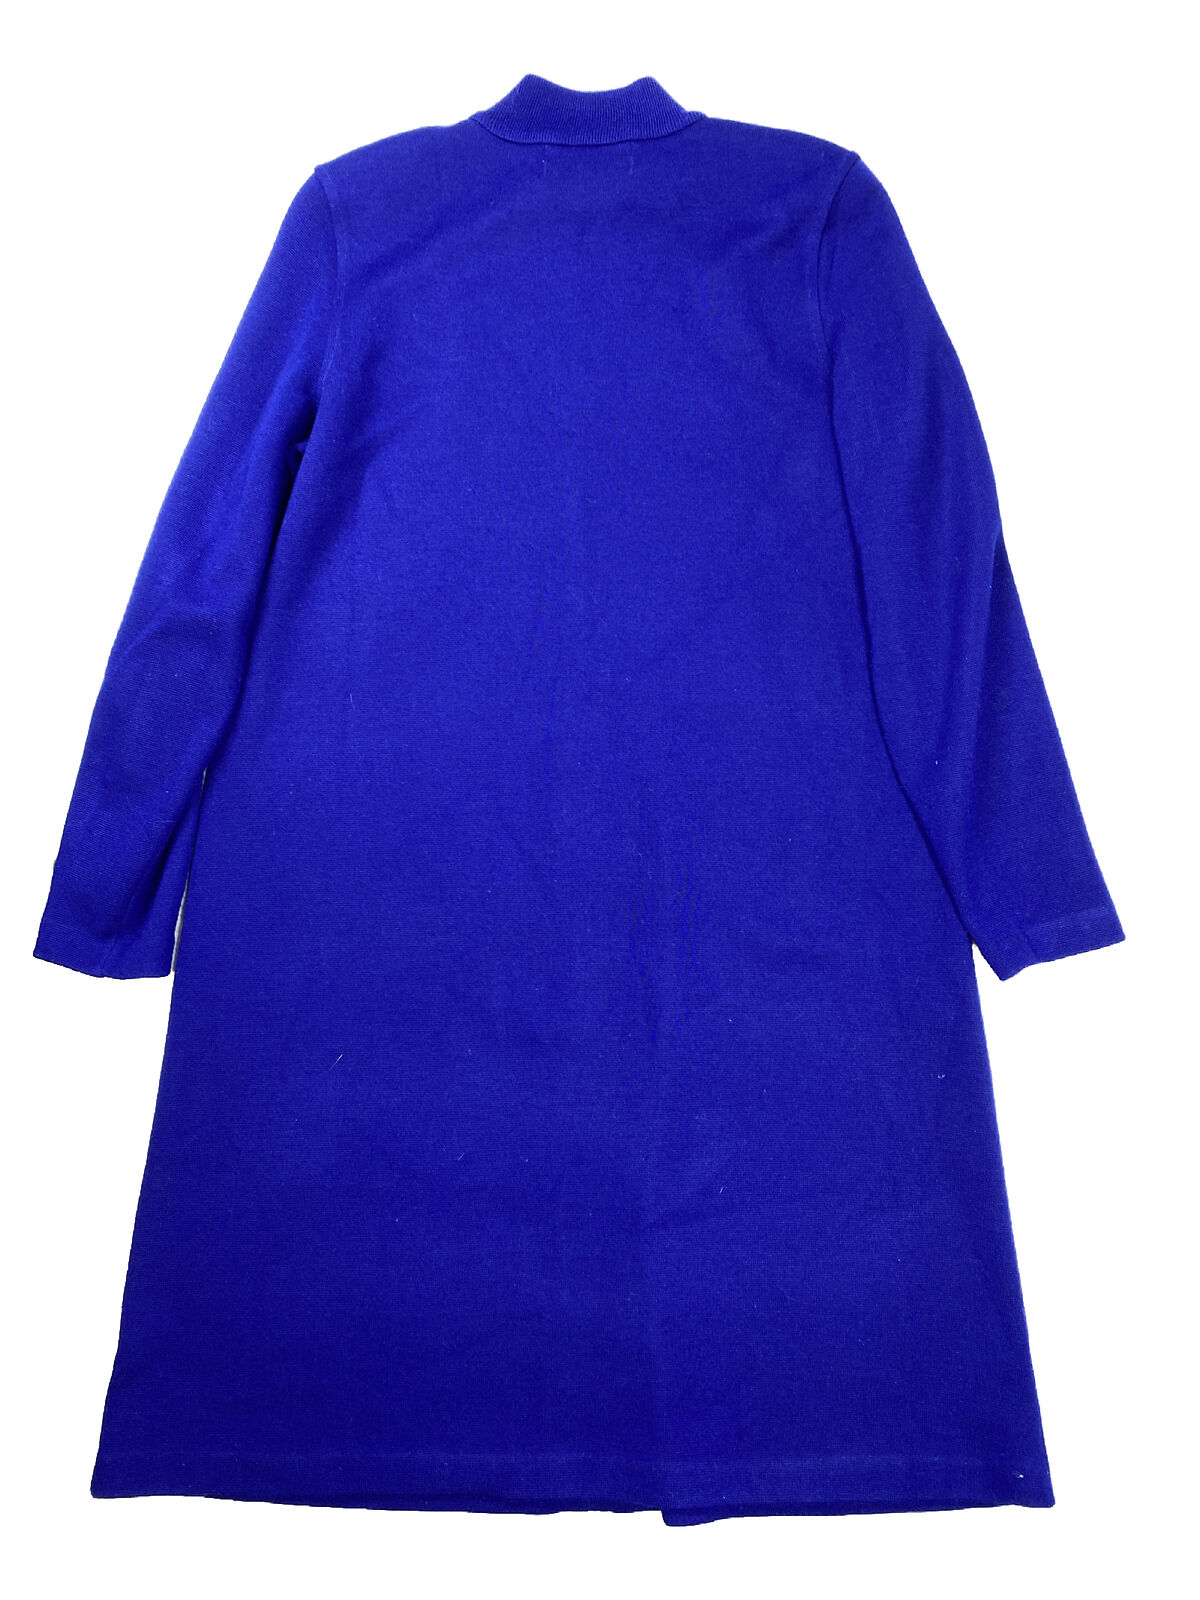 Nina Charles for Kasper Women's Blue Long Sleeve Wool Sweater Dress - M